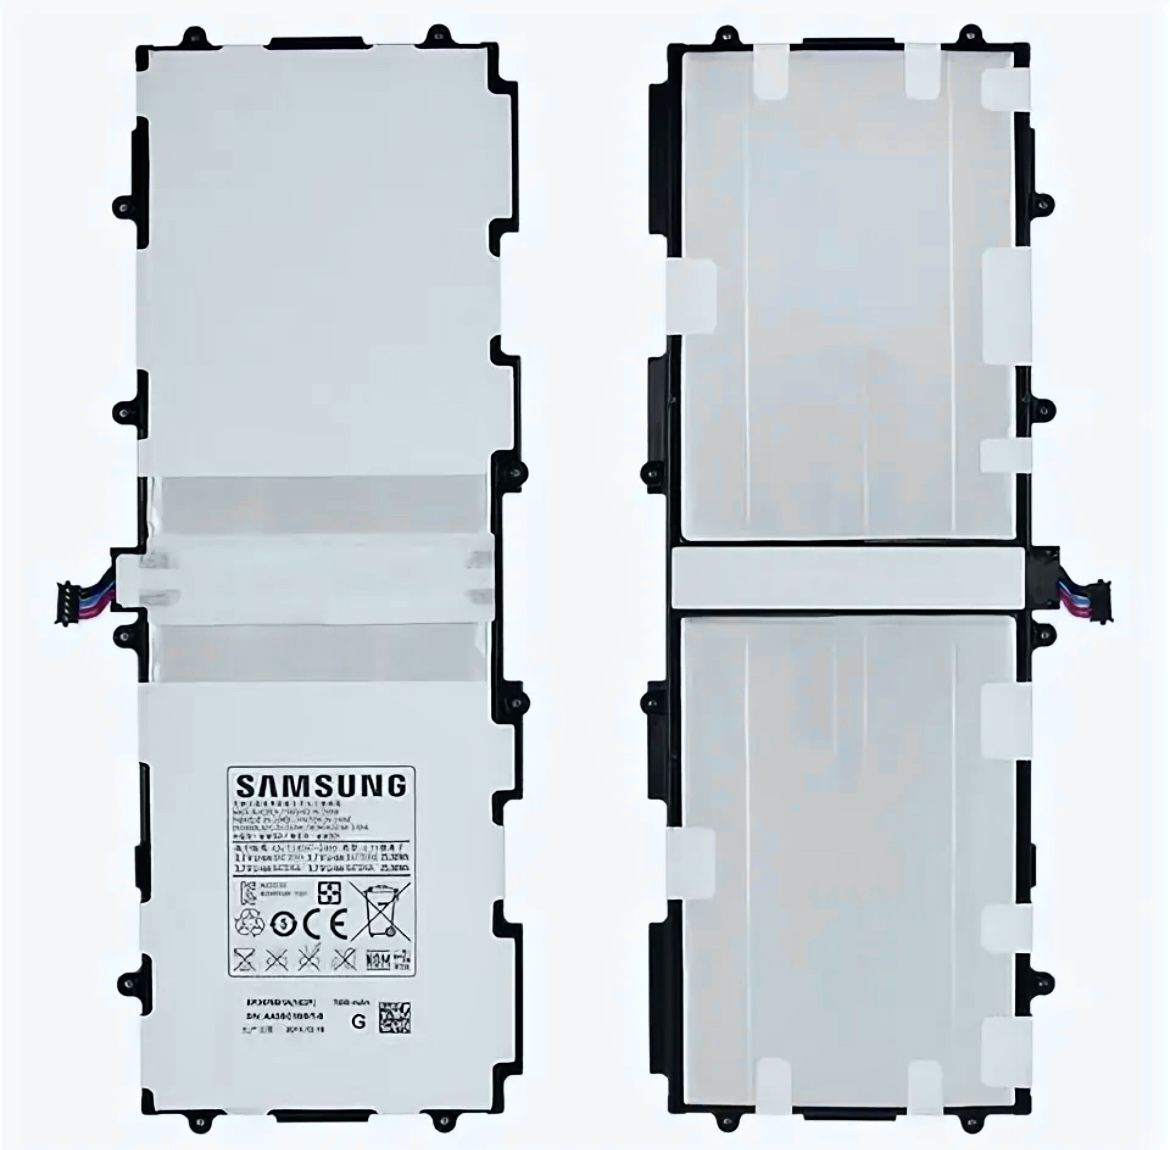 Samsung Gt N8000 Аккумулятор